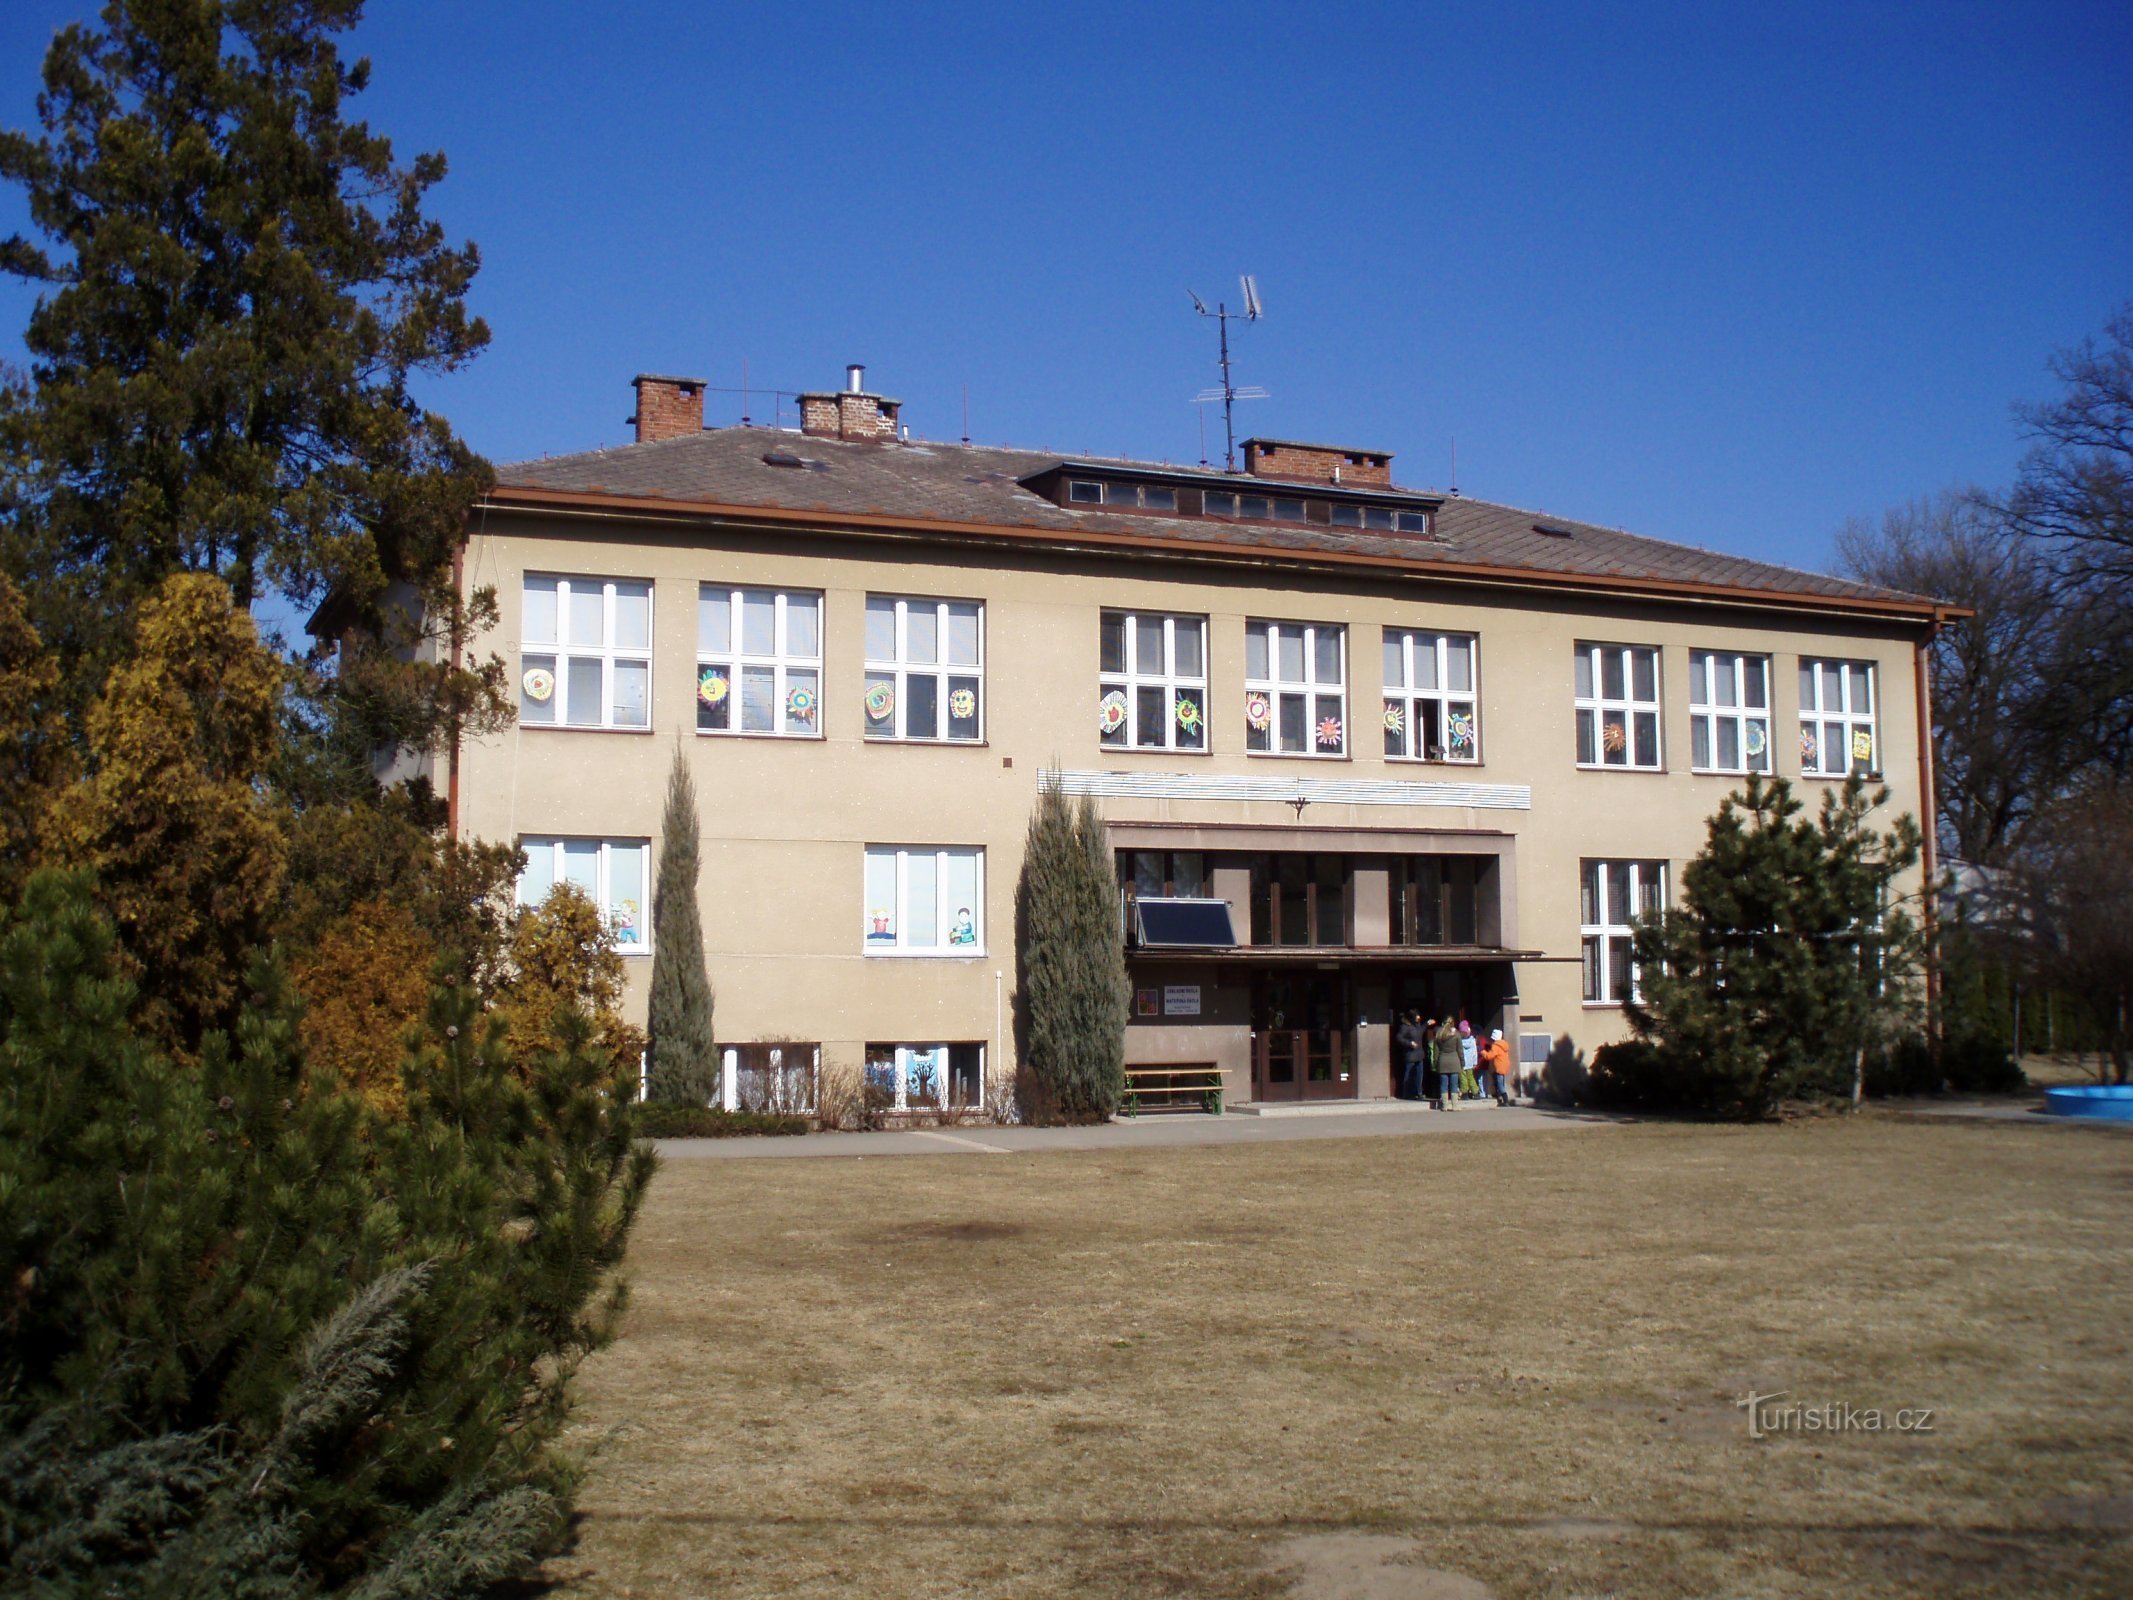 Skola i Malšov Lhota (8.3.2011 mars XNUMX)